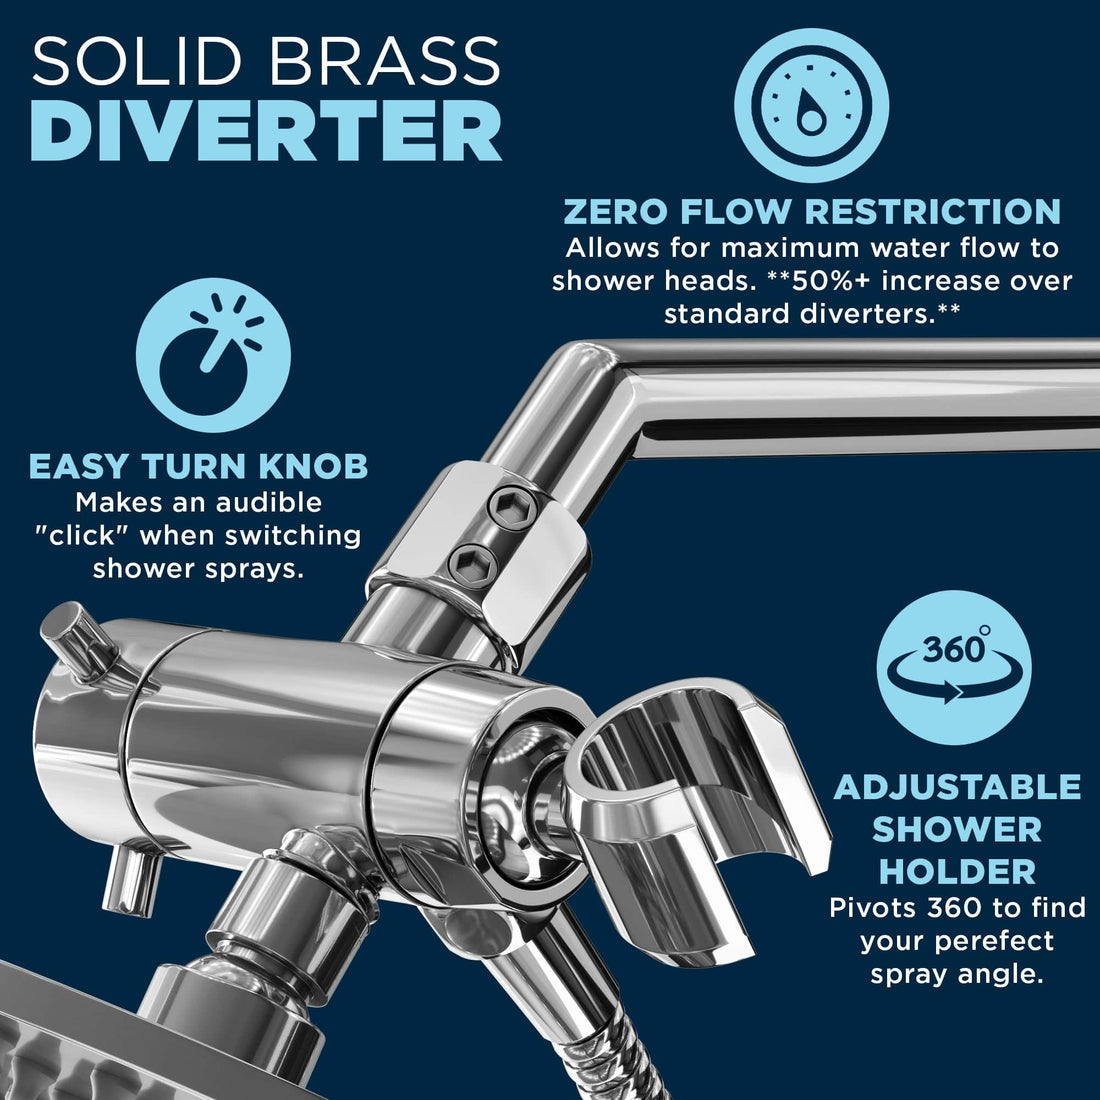 (Diverter) 3-Way Brass Diverter To Switch Valve from Rain Shower Head to Handheld Shower Head Chrome - The Shower Head Store